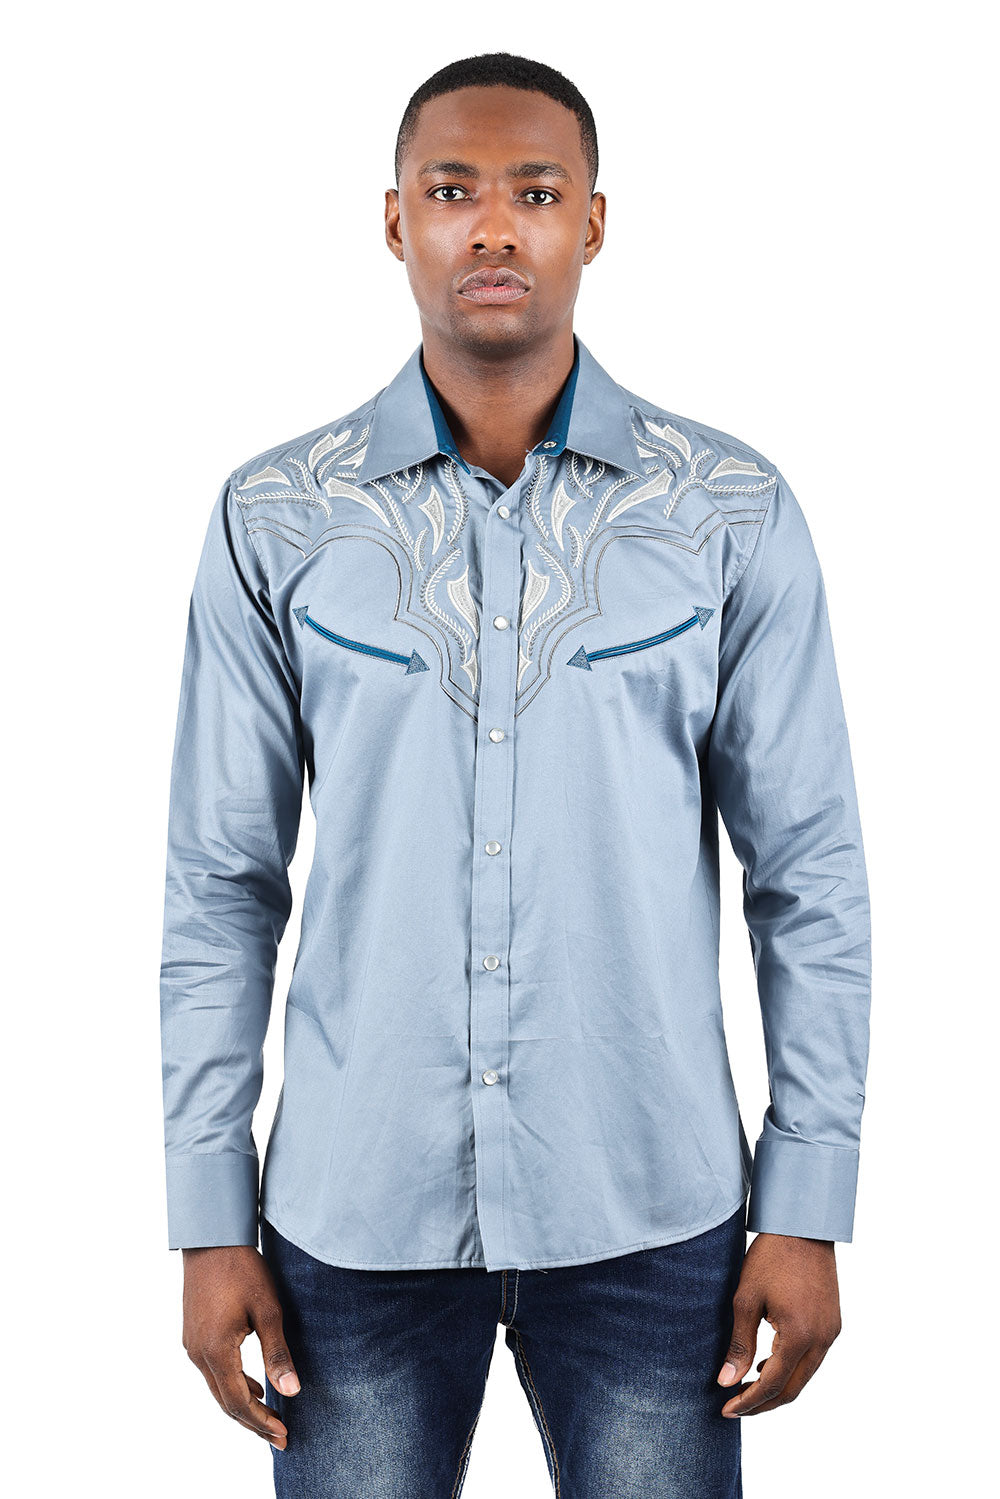 Barabas OCCIDENTAL ARROWS Light Blue Western Shirt - Dudes Boutique